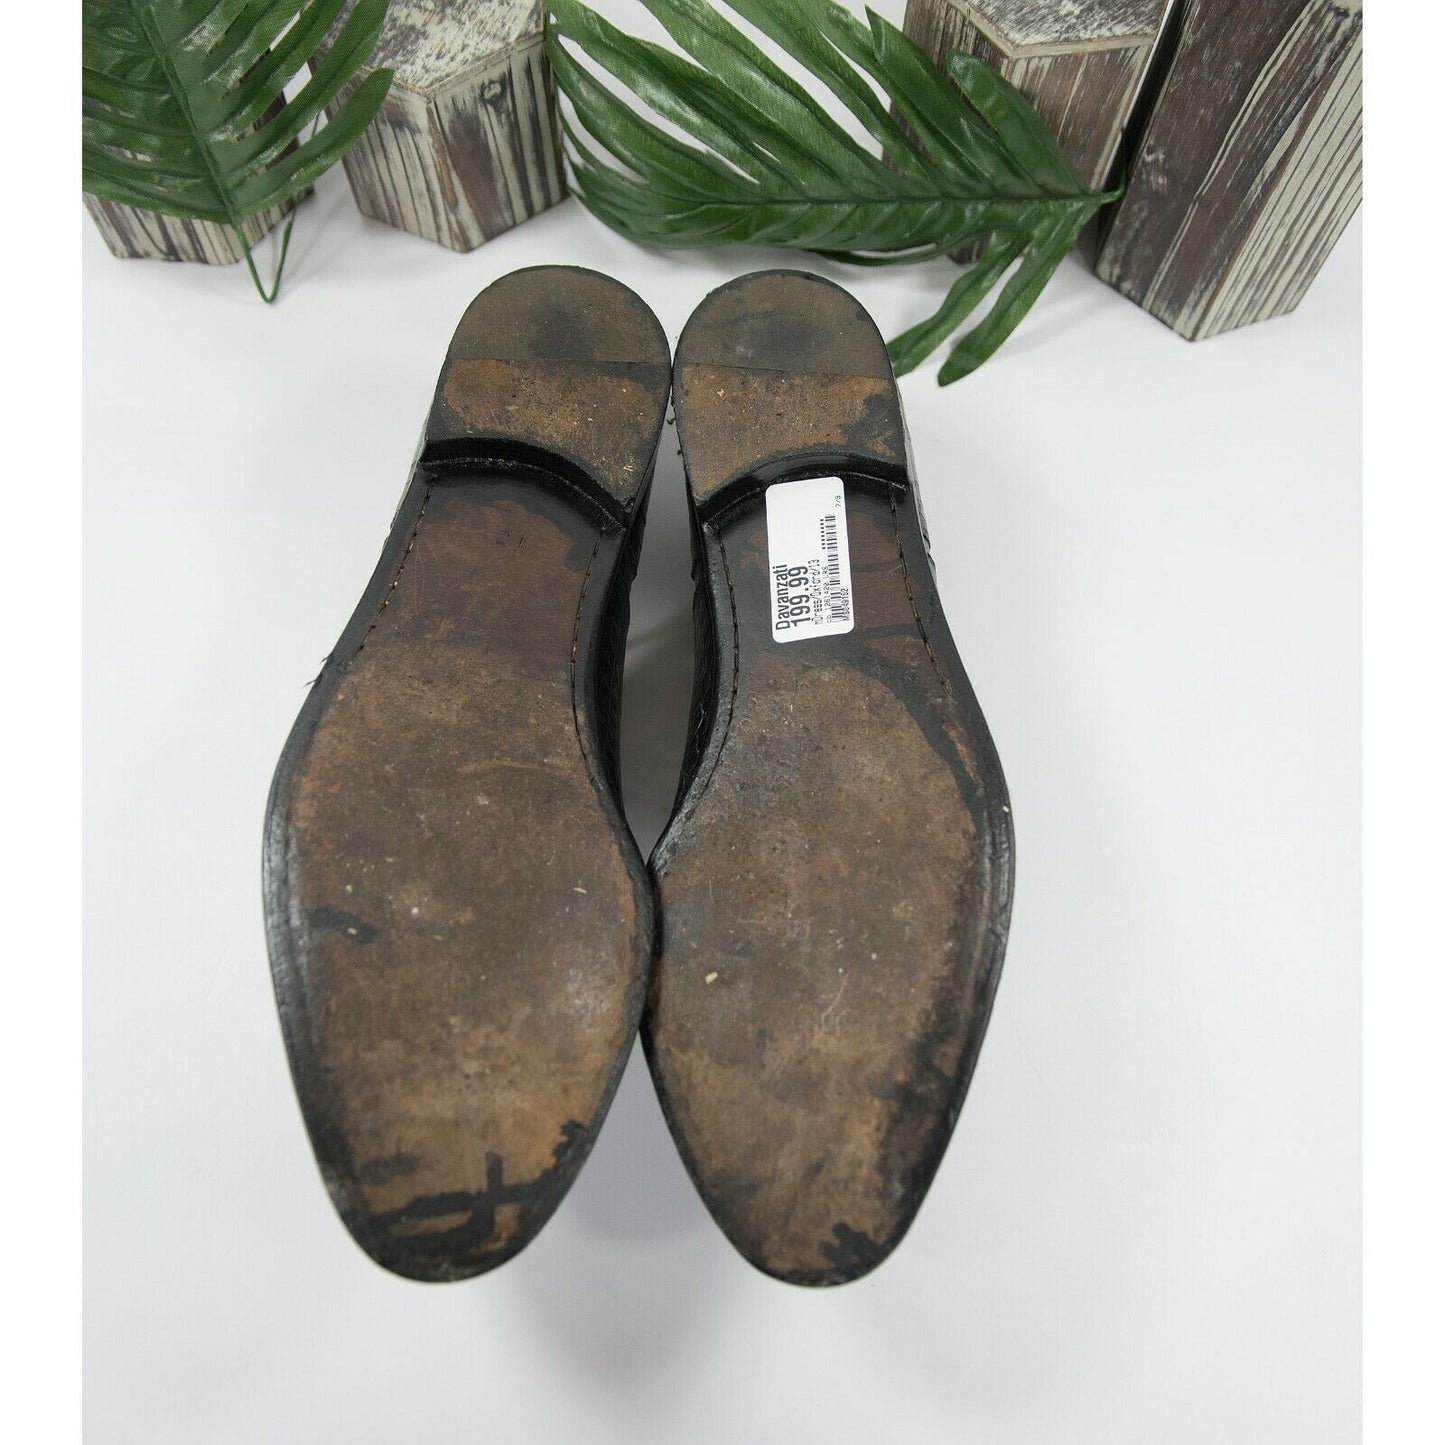 Davanzati Black Croc Leather Lace Up Oxford Loafer Shoes Size 13